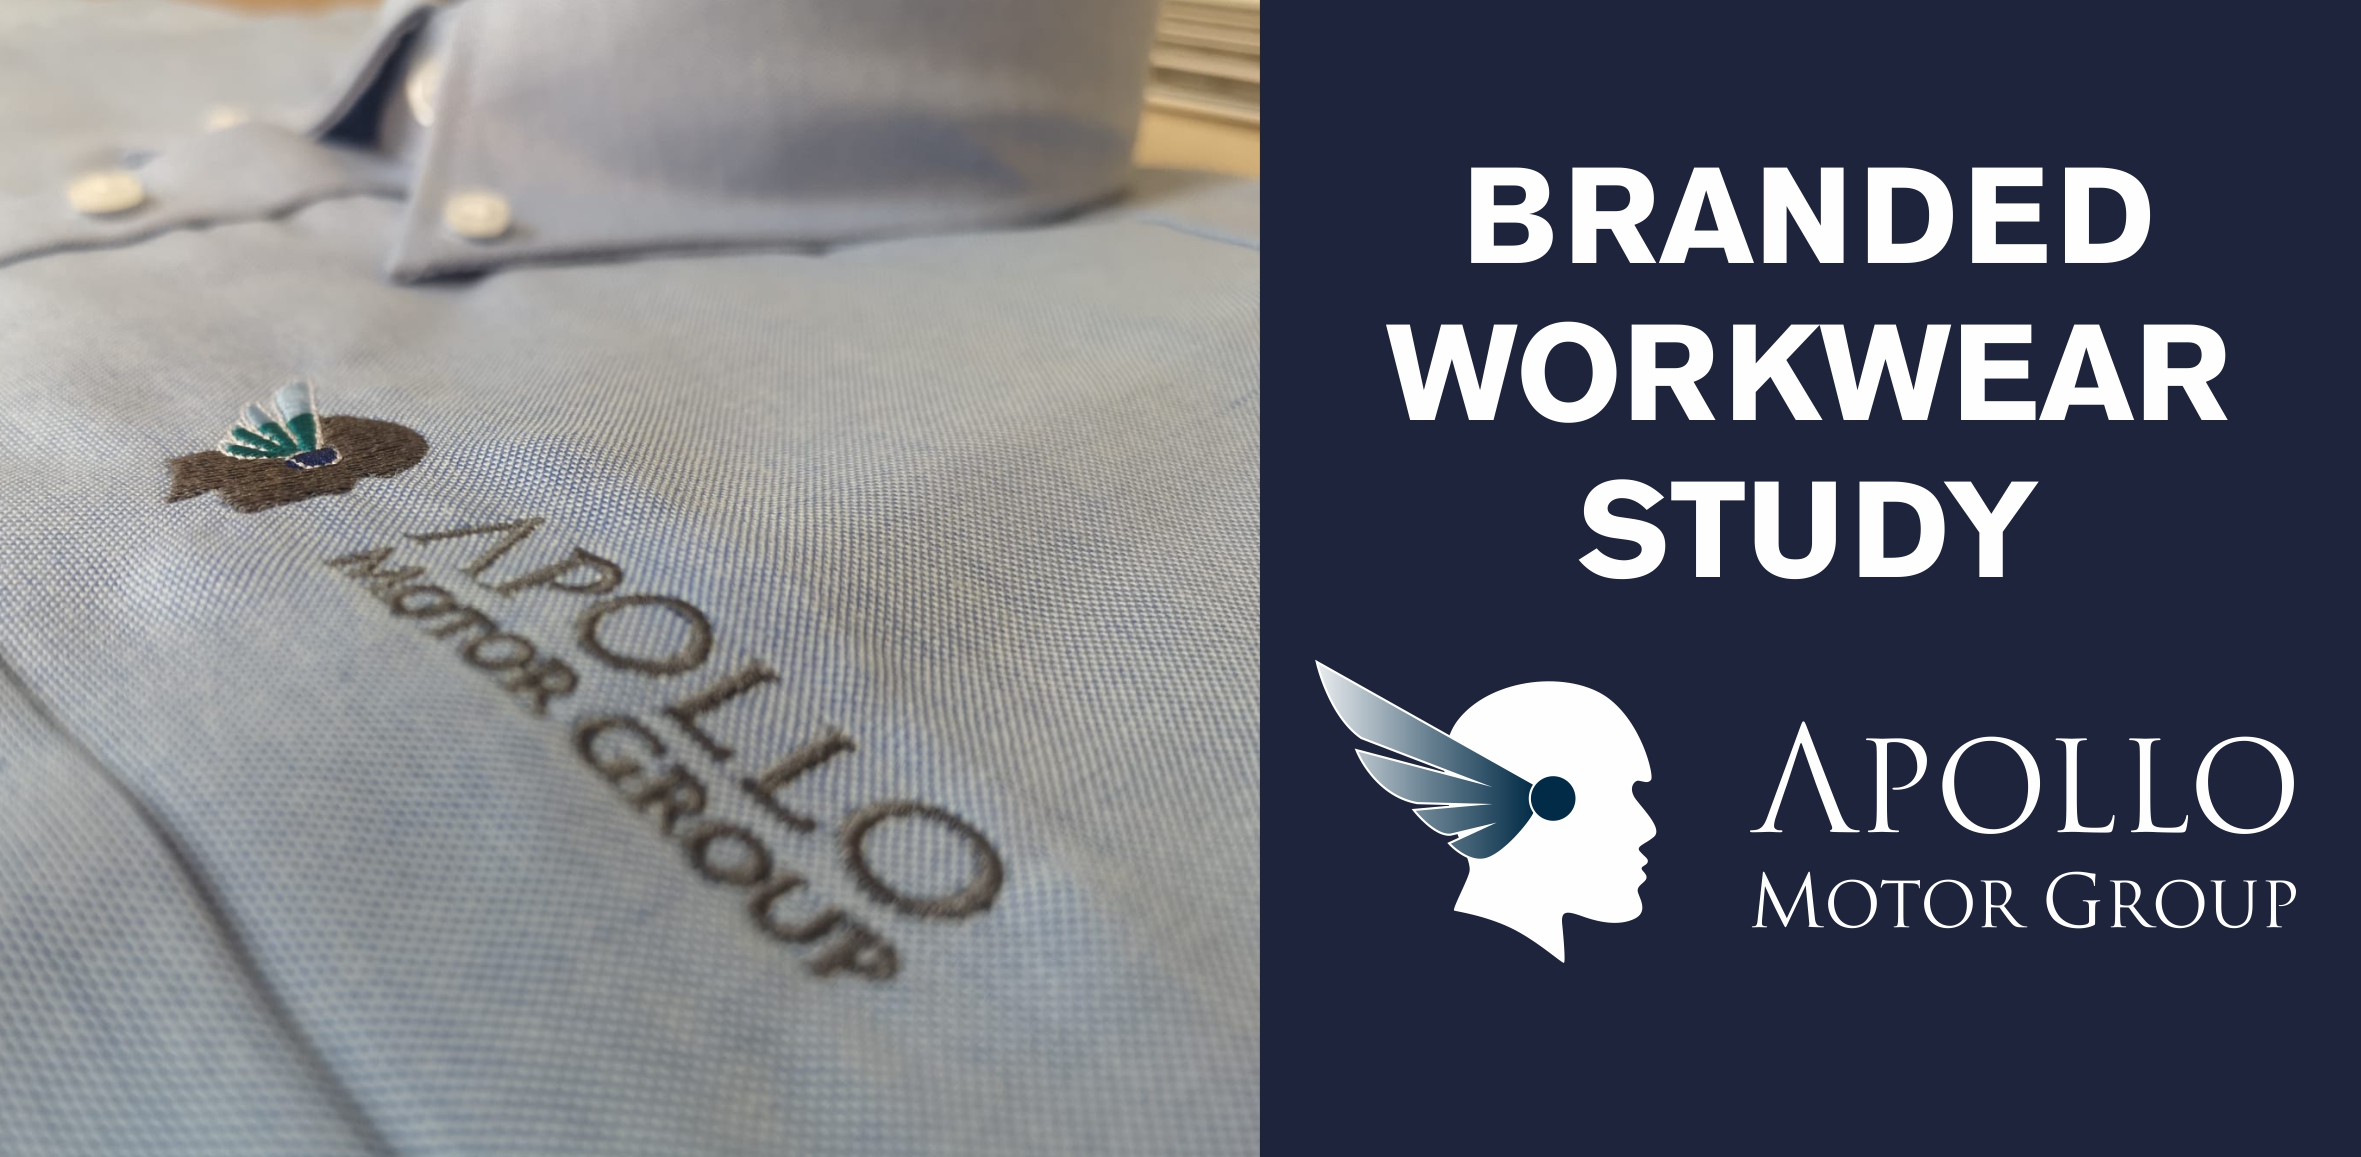 Branded Workwear case study: Apollo Motor Group